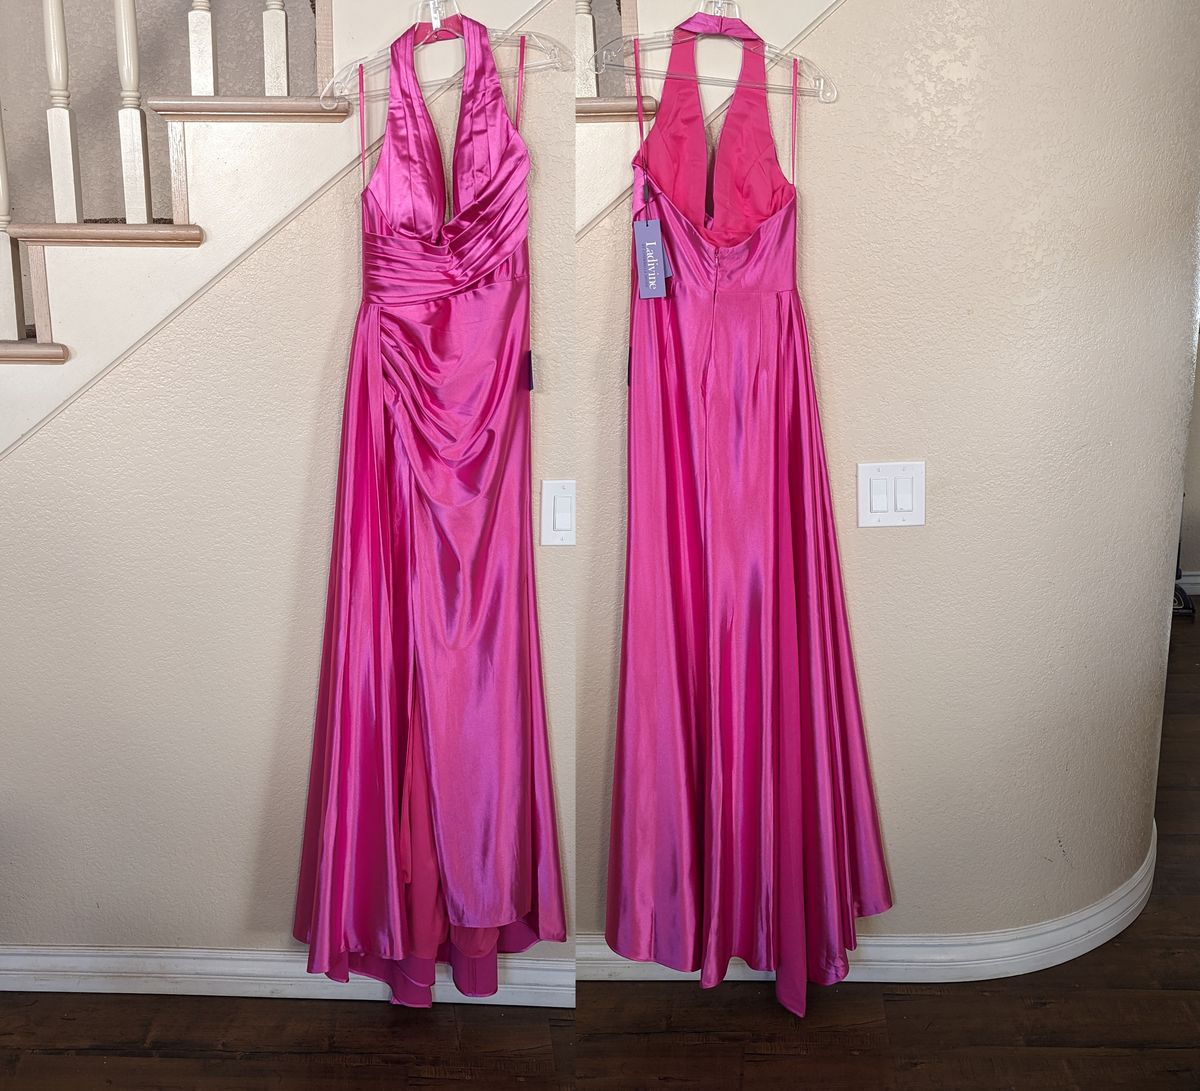 Style Fuchsia Halter Side Slit Satin Dress Size 2 Prom Halter Hot Pink Side Slit Dress on Queenly